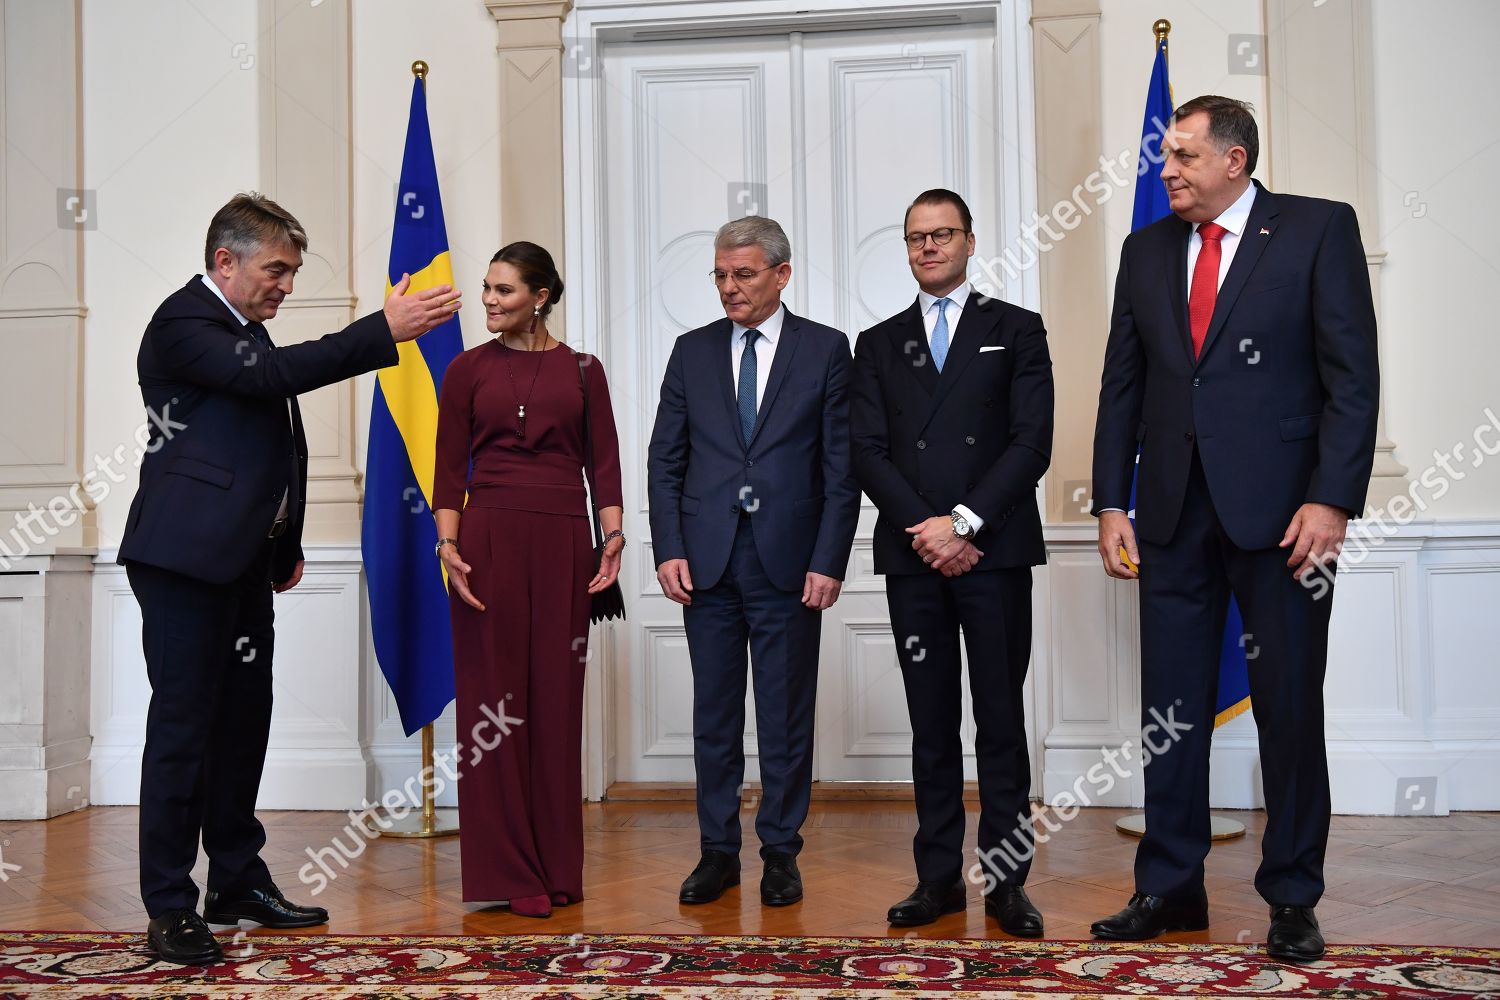 swedish-royals-visit-to-bosnia-herzegovina-shutterstock-editorial-10467349e.jpg